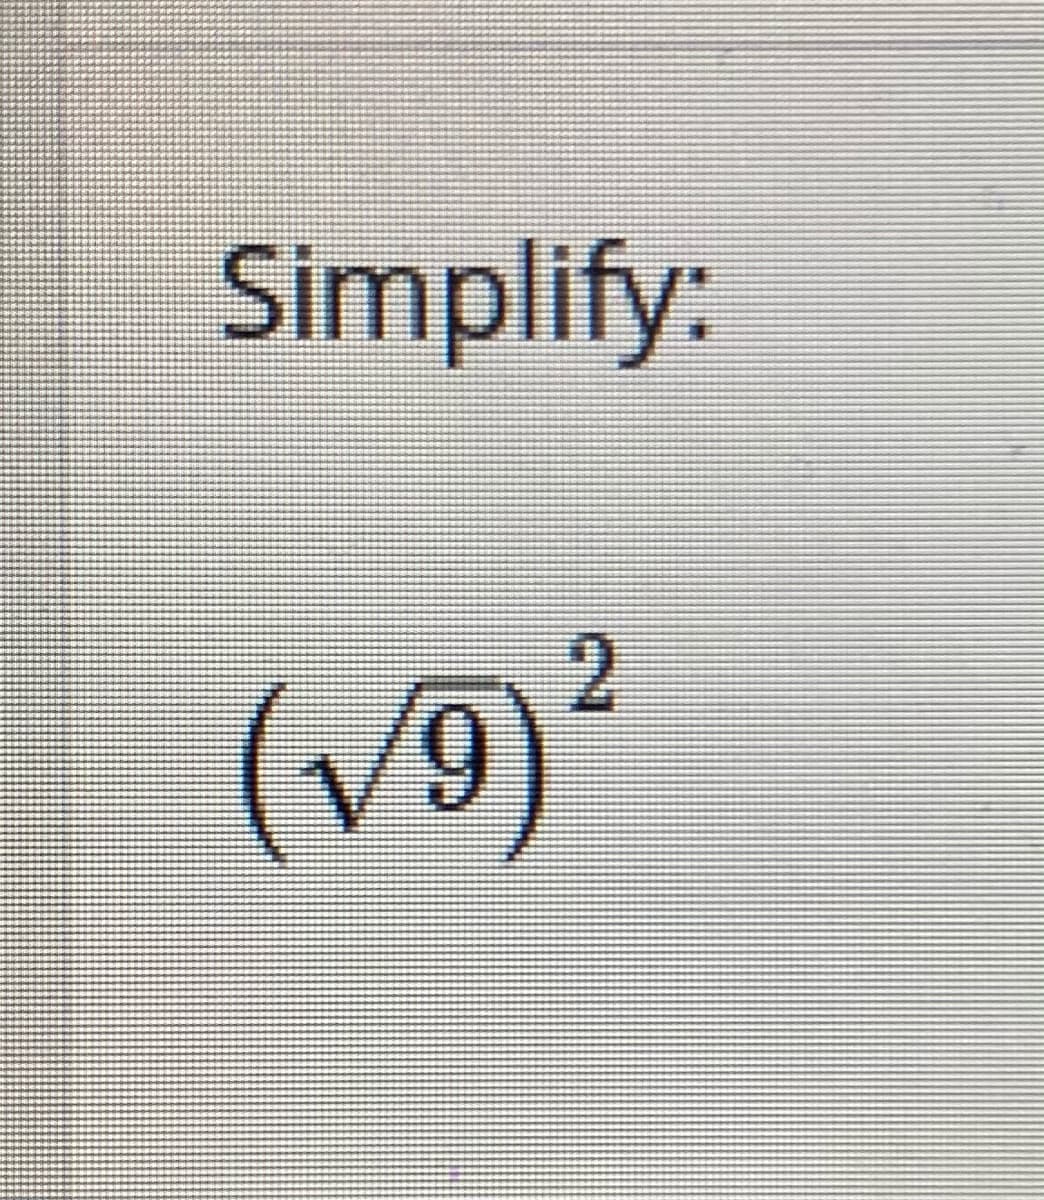 Simplify:
2
(v9)
